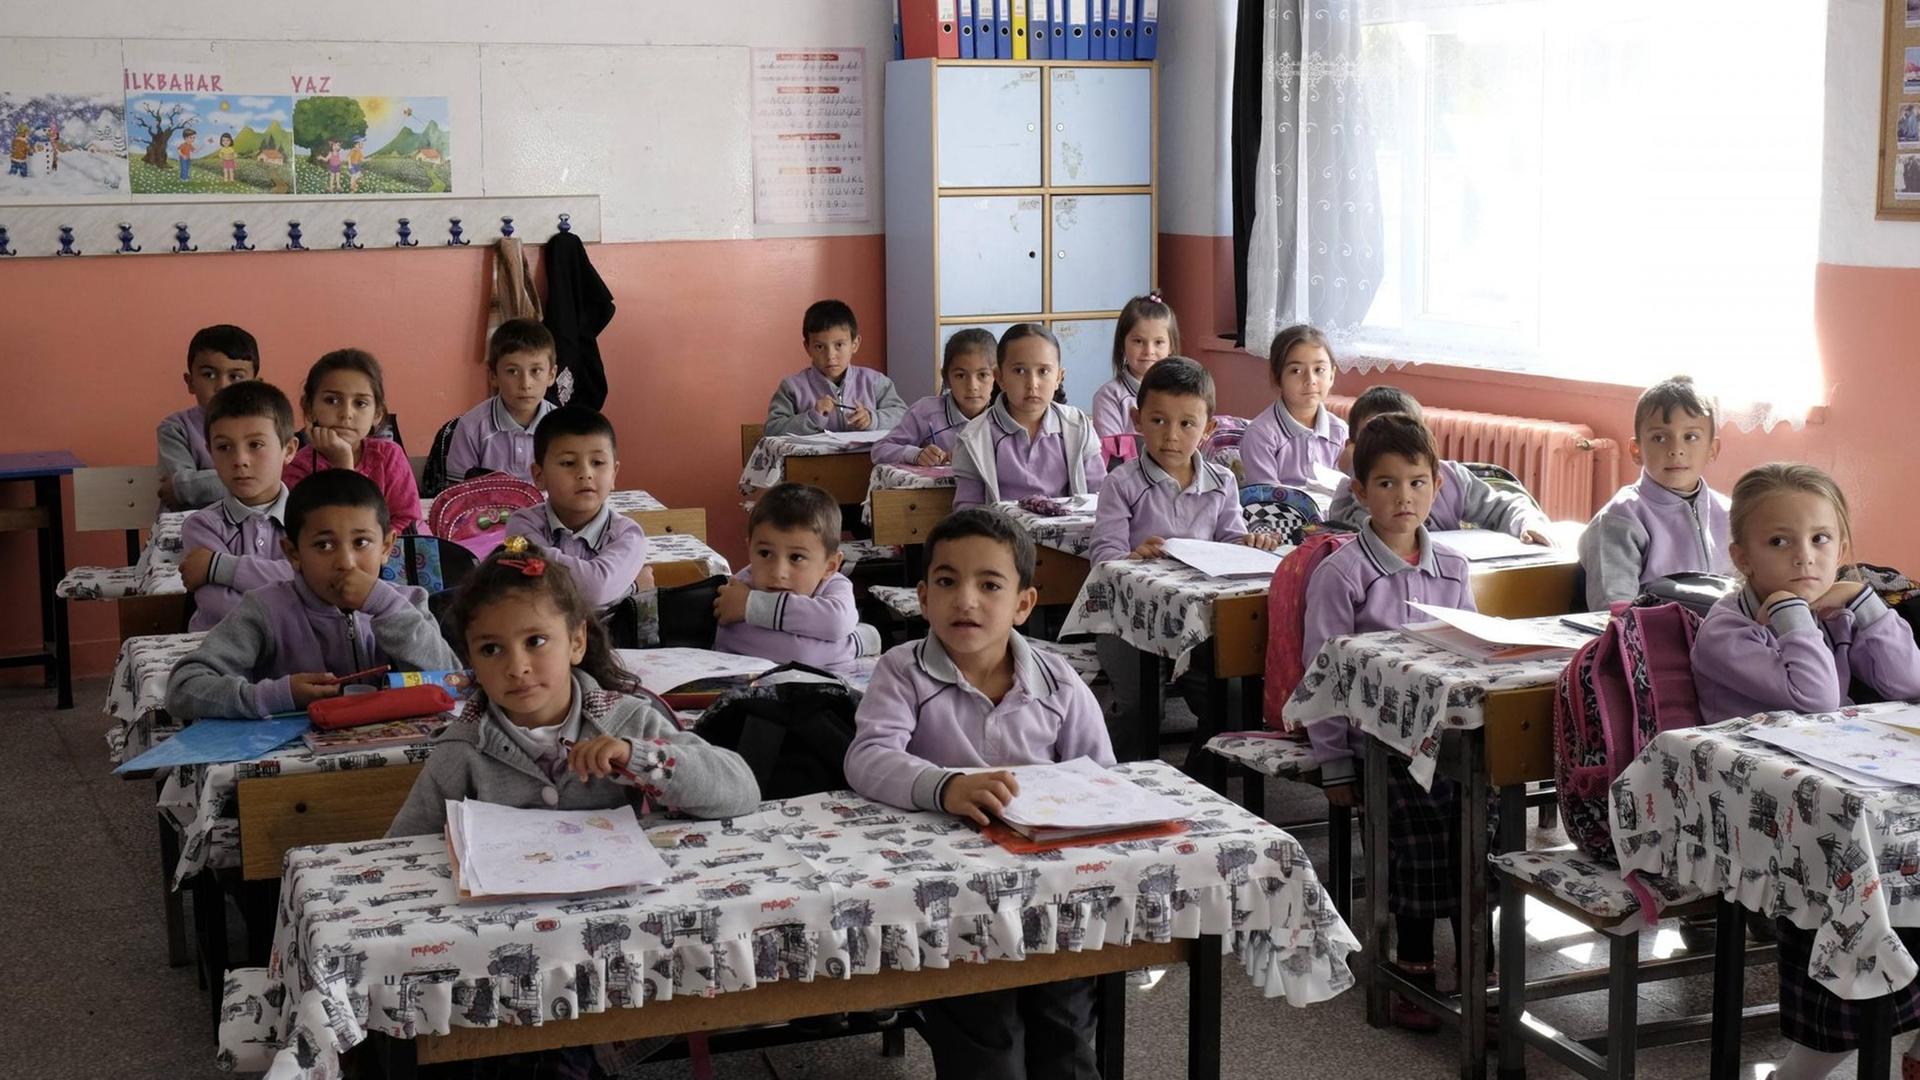 Kinder in einer Schule, Kaymakli, Kappadokien, Türkei, Asien.